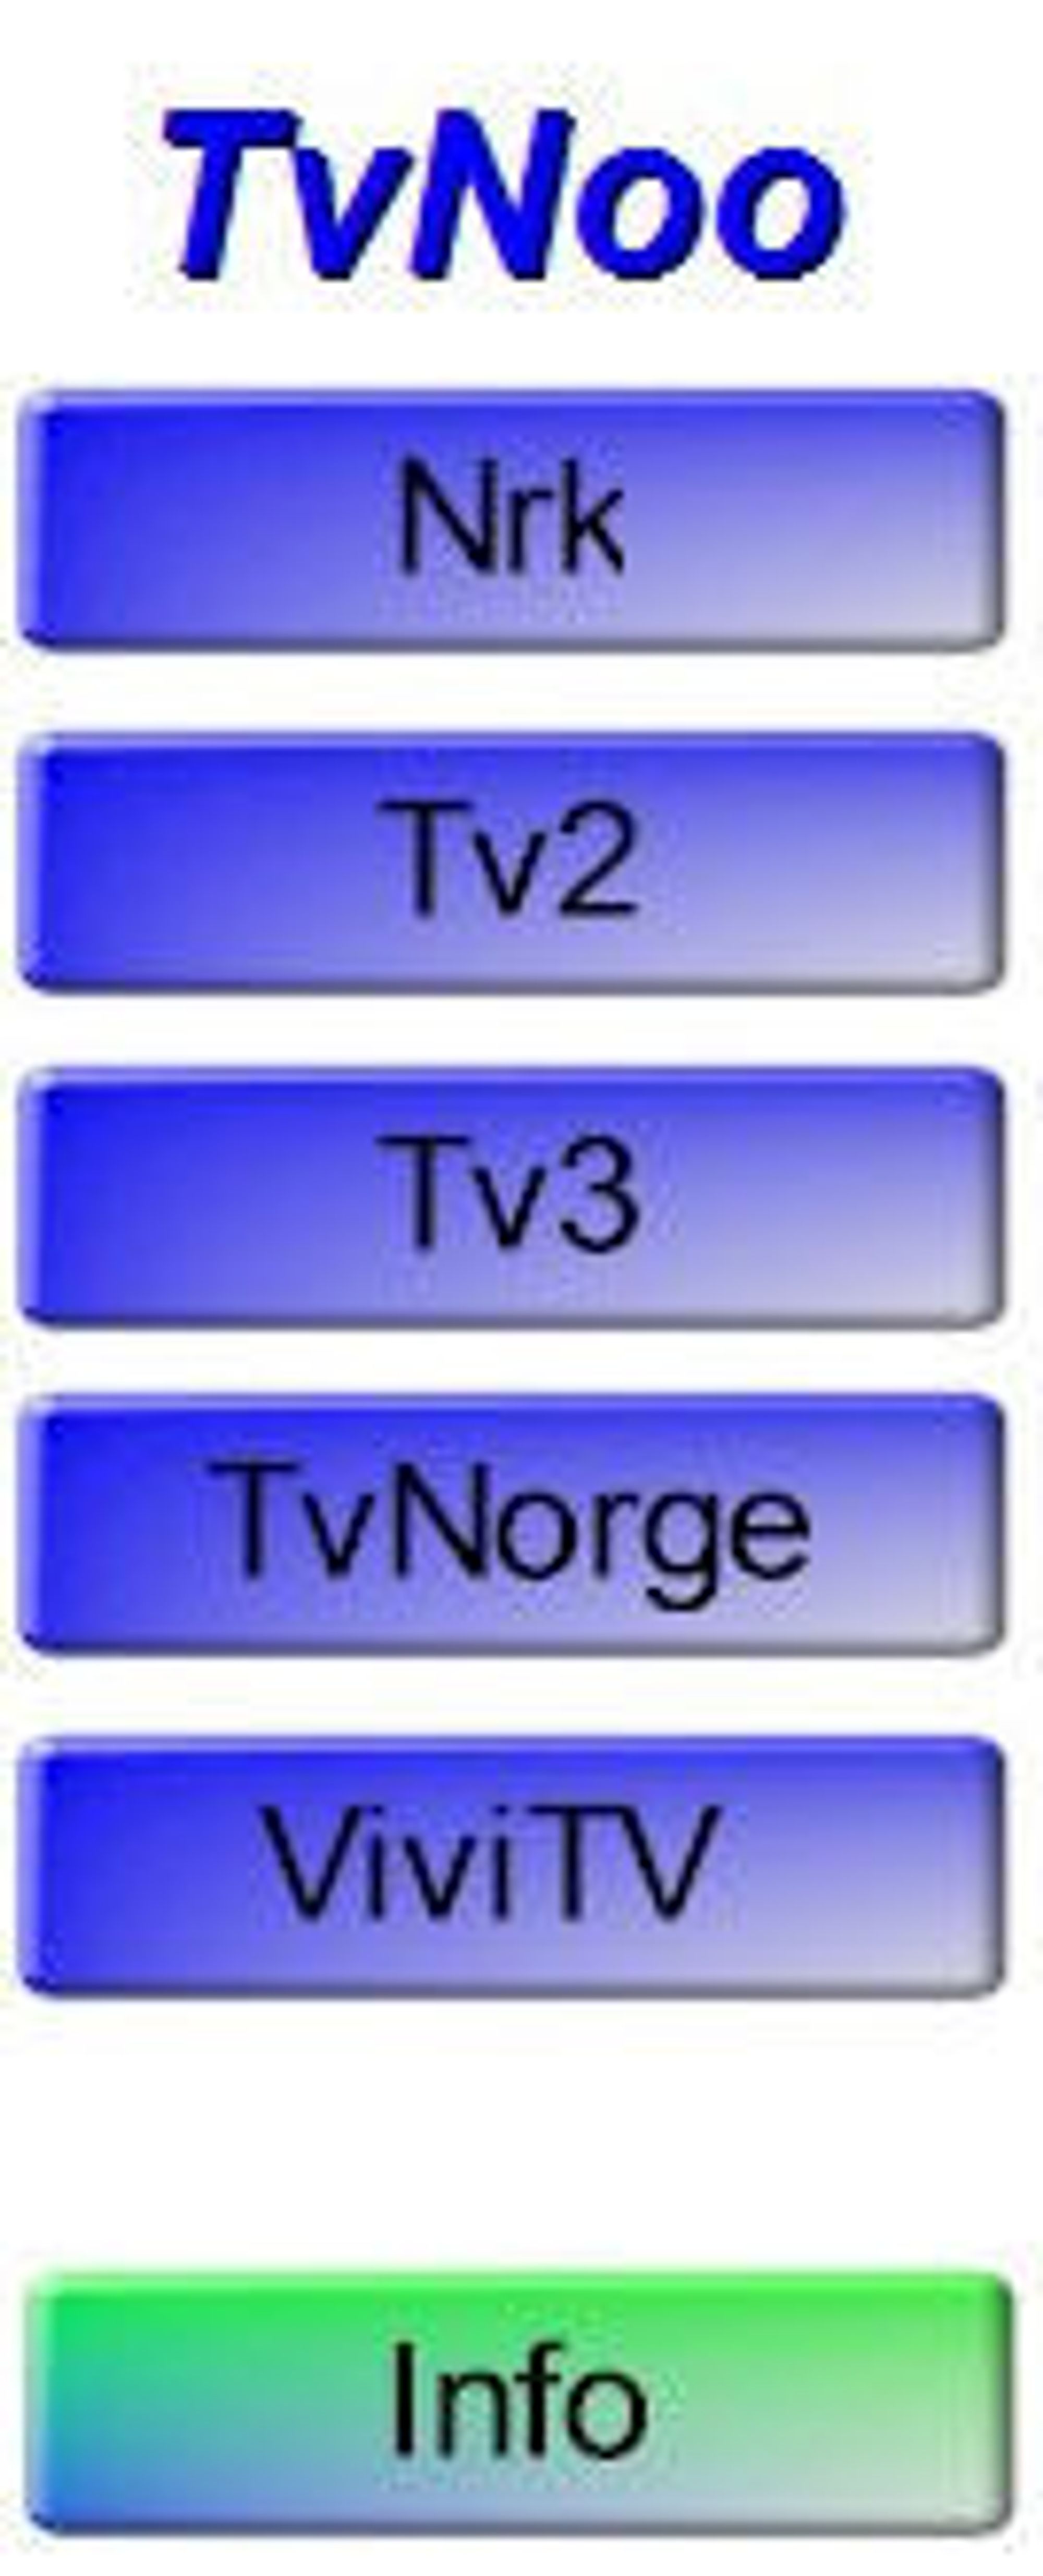 Flere norske TV-kanaler gratis på nett - Digi.no